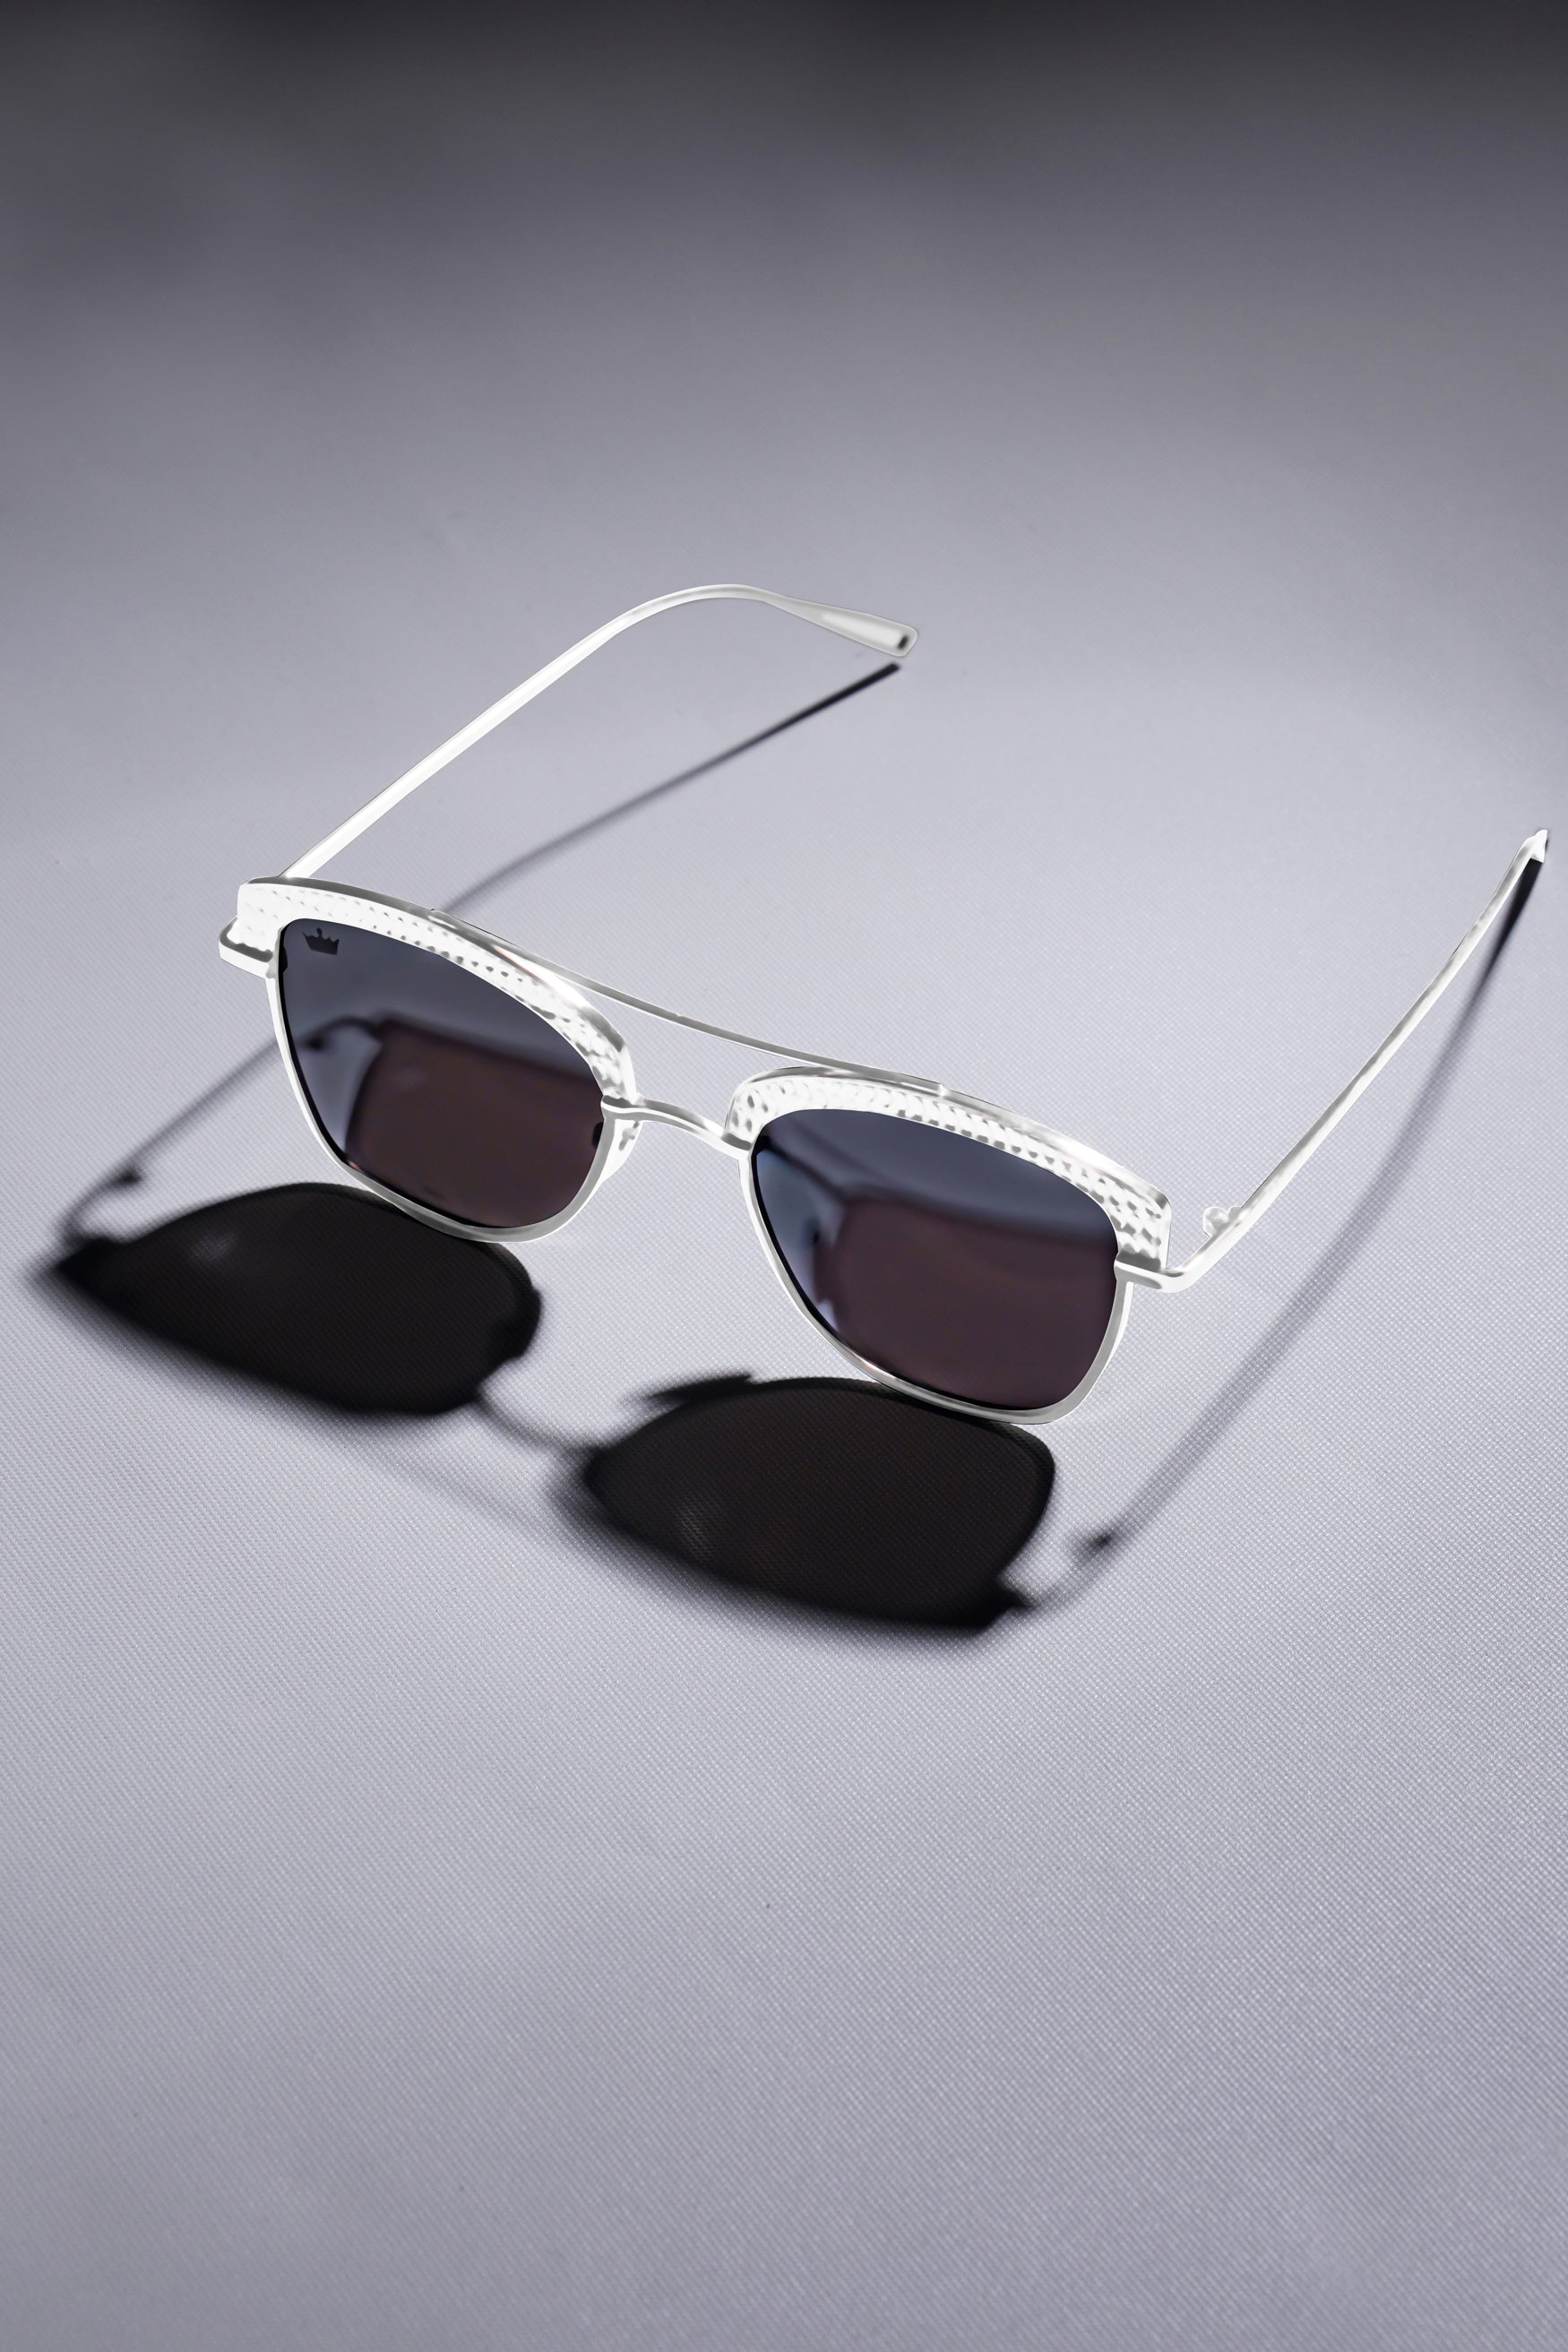 Lava Gray French Crown Full Rim Unisex Sunglasses